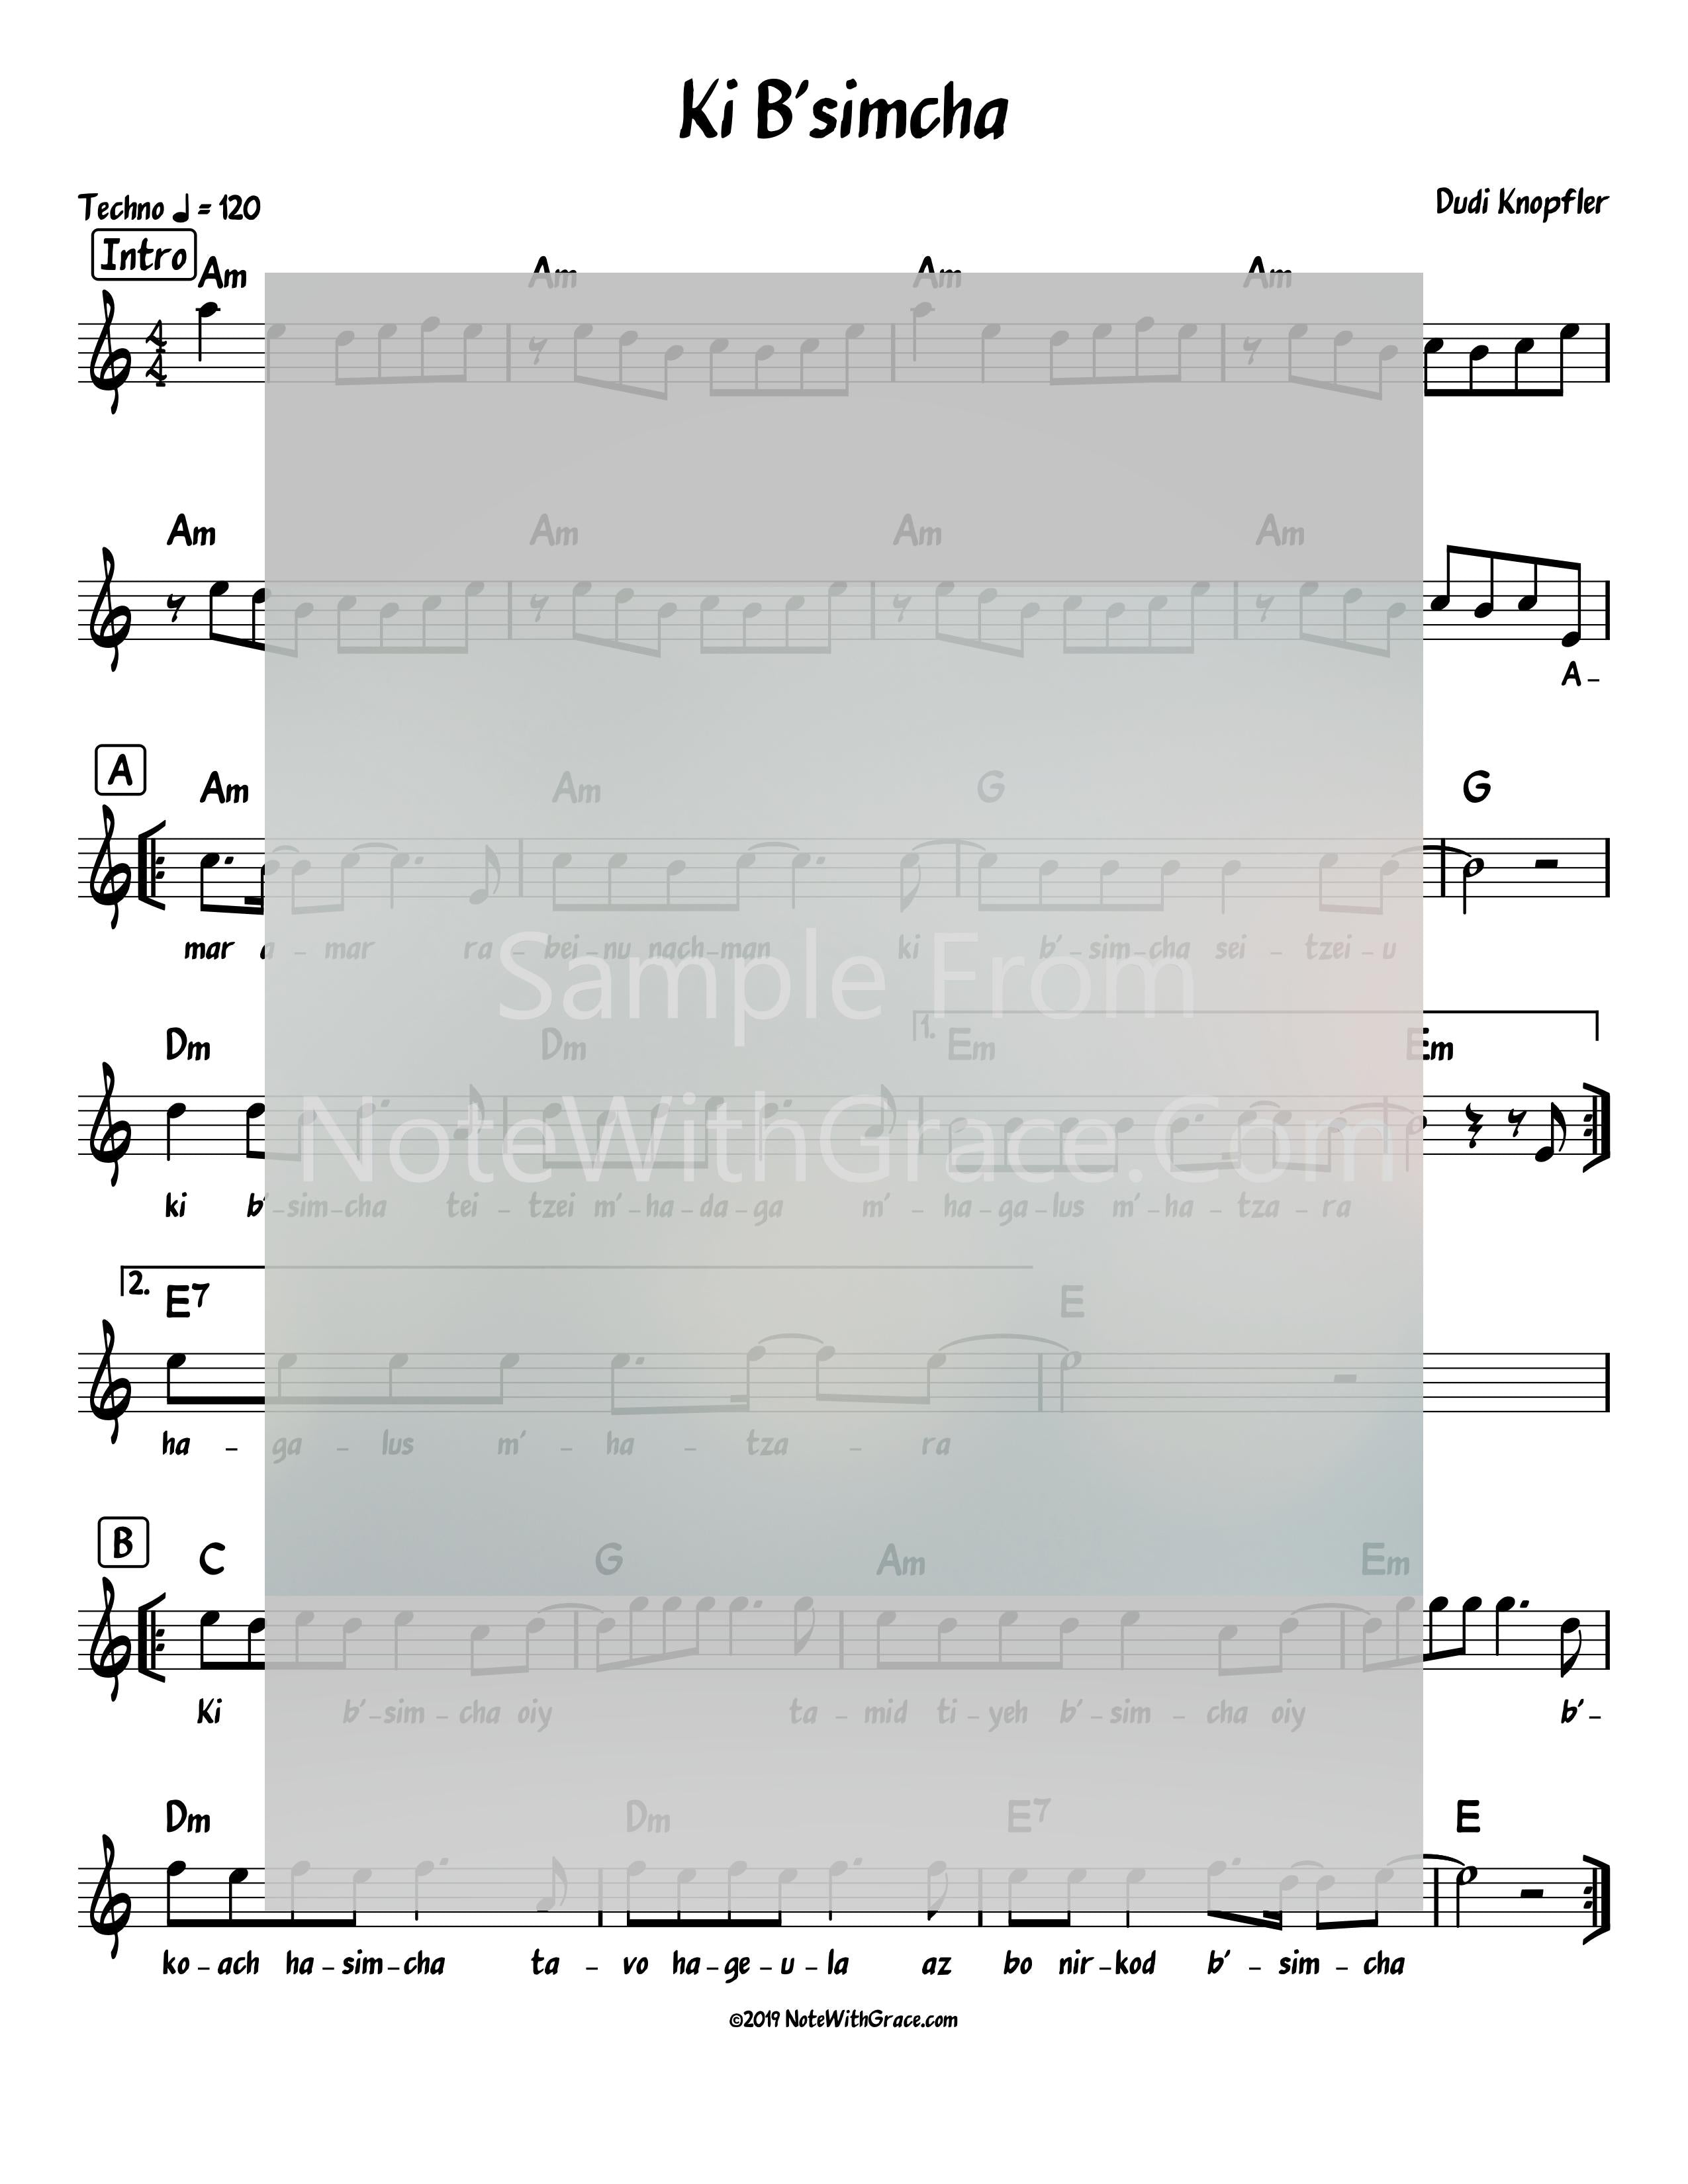 Ki B'simcha Lead Sheet (Dudi Knopfler) Single Released 2019-Sheet music-NoteWithGrace.com